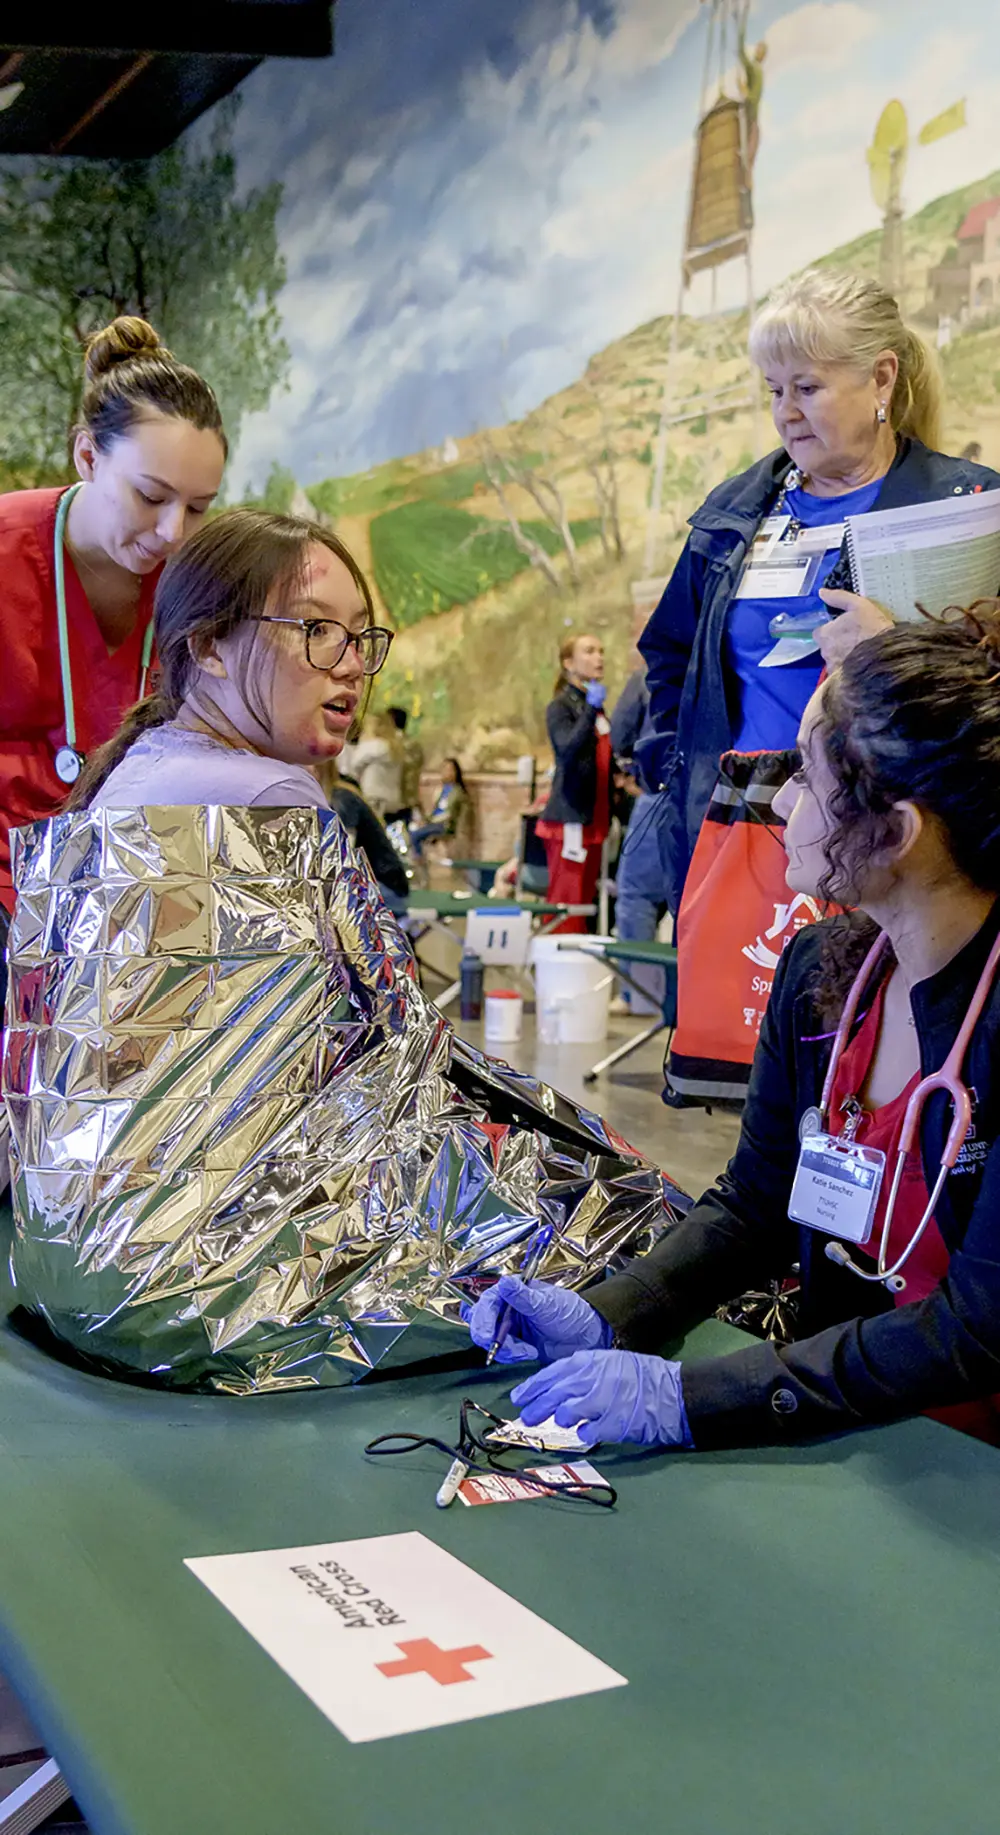 Disaster Day volunteer in foil blanket talking with nurse